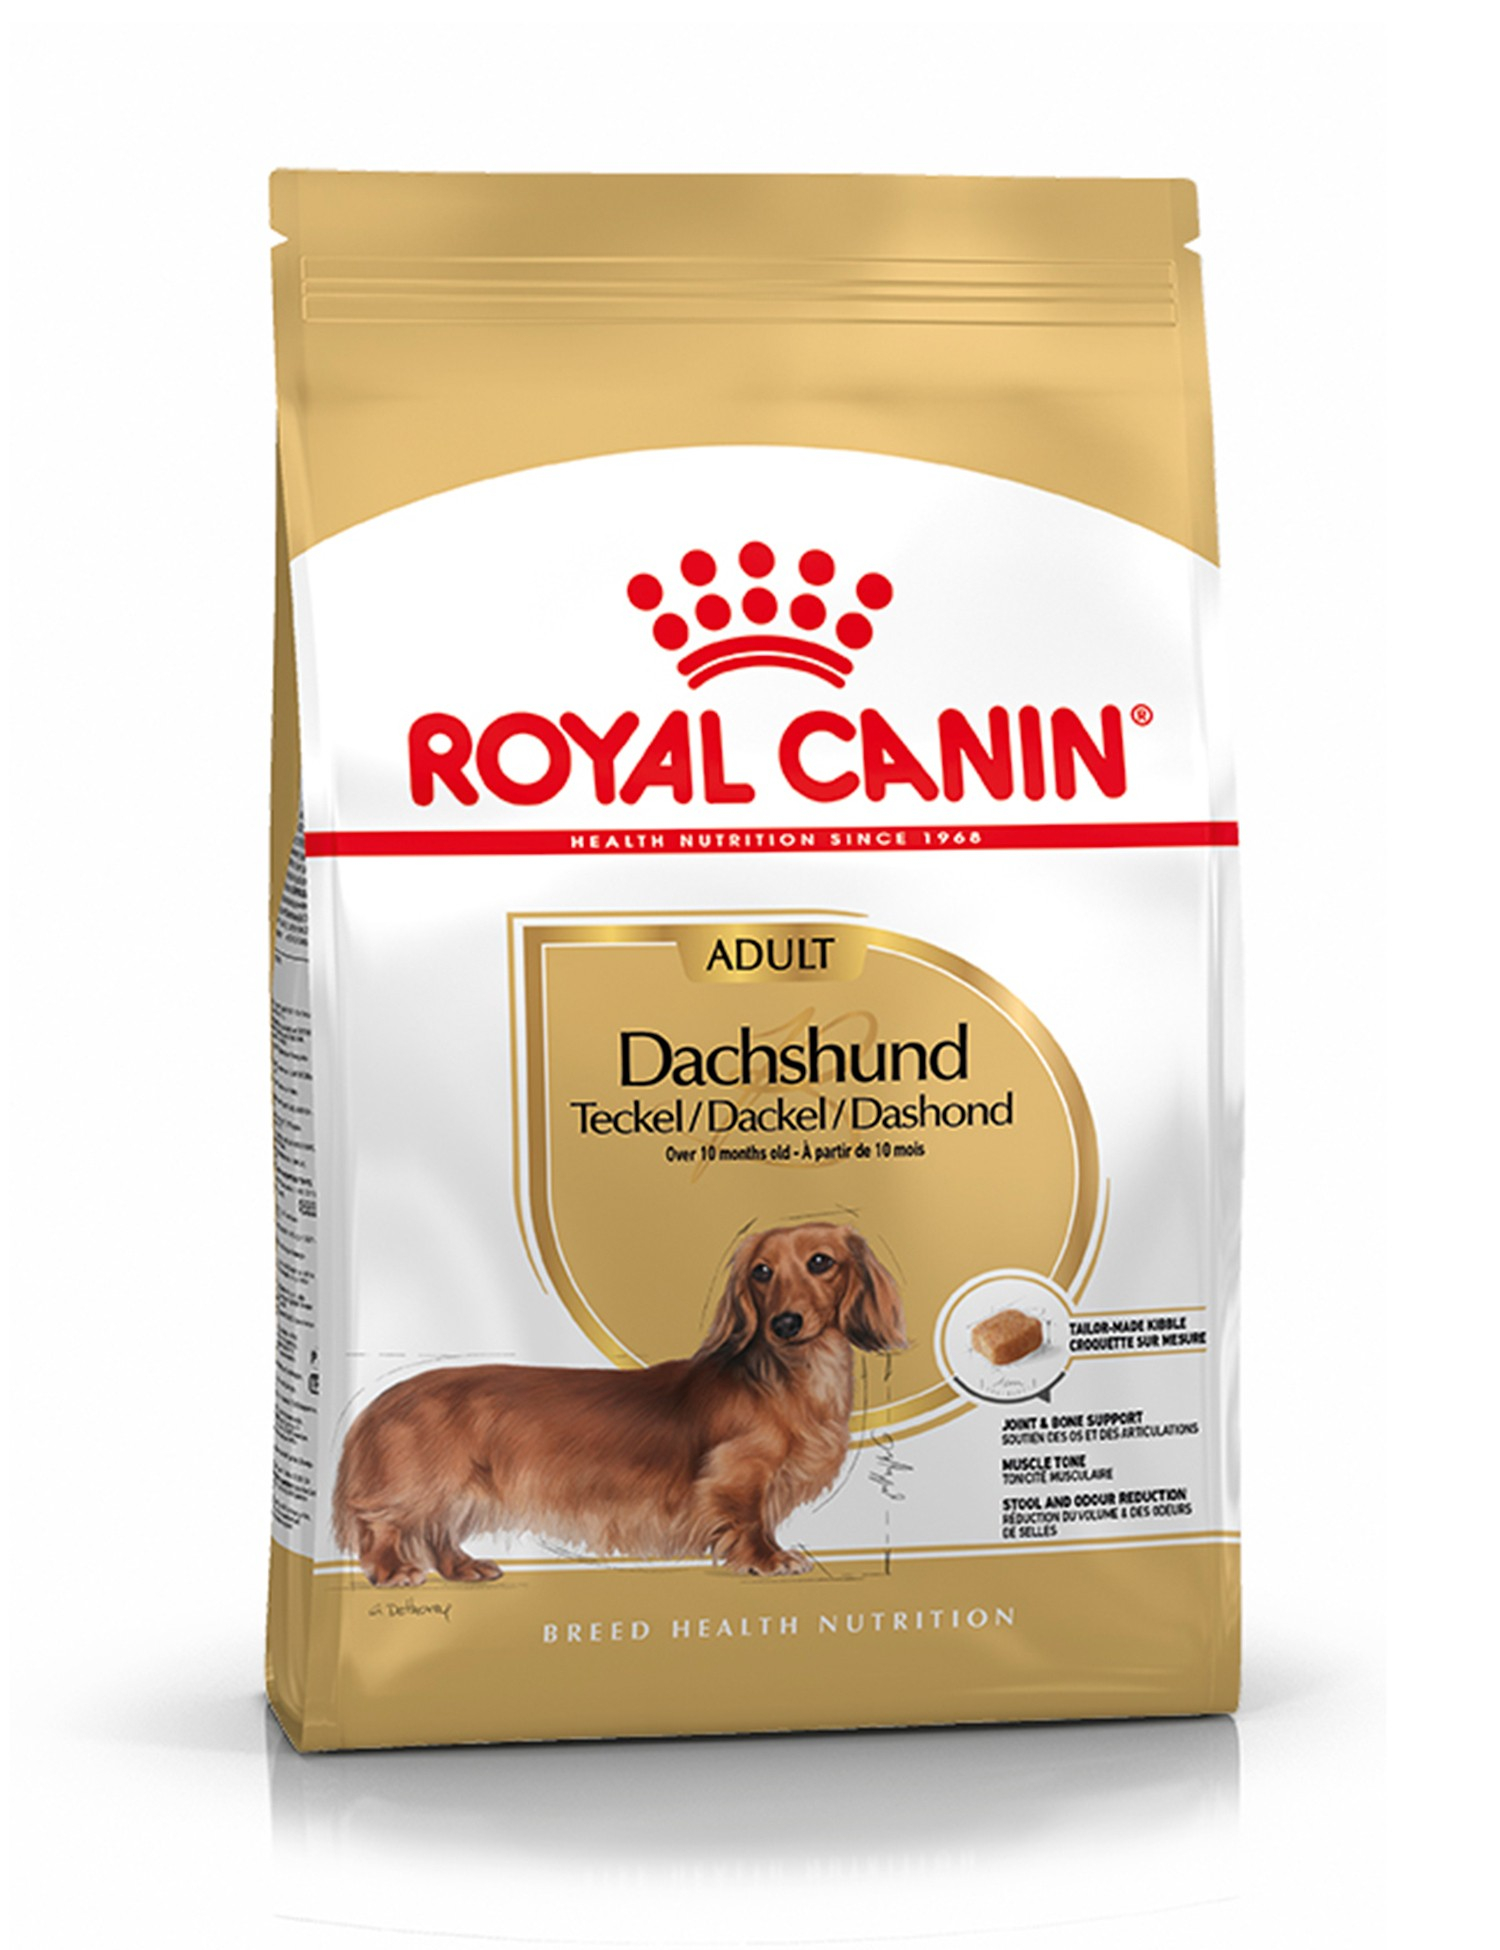 Royal Canin Breed Bassotti Adulti